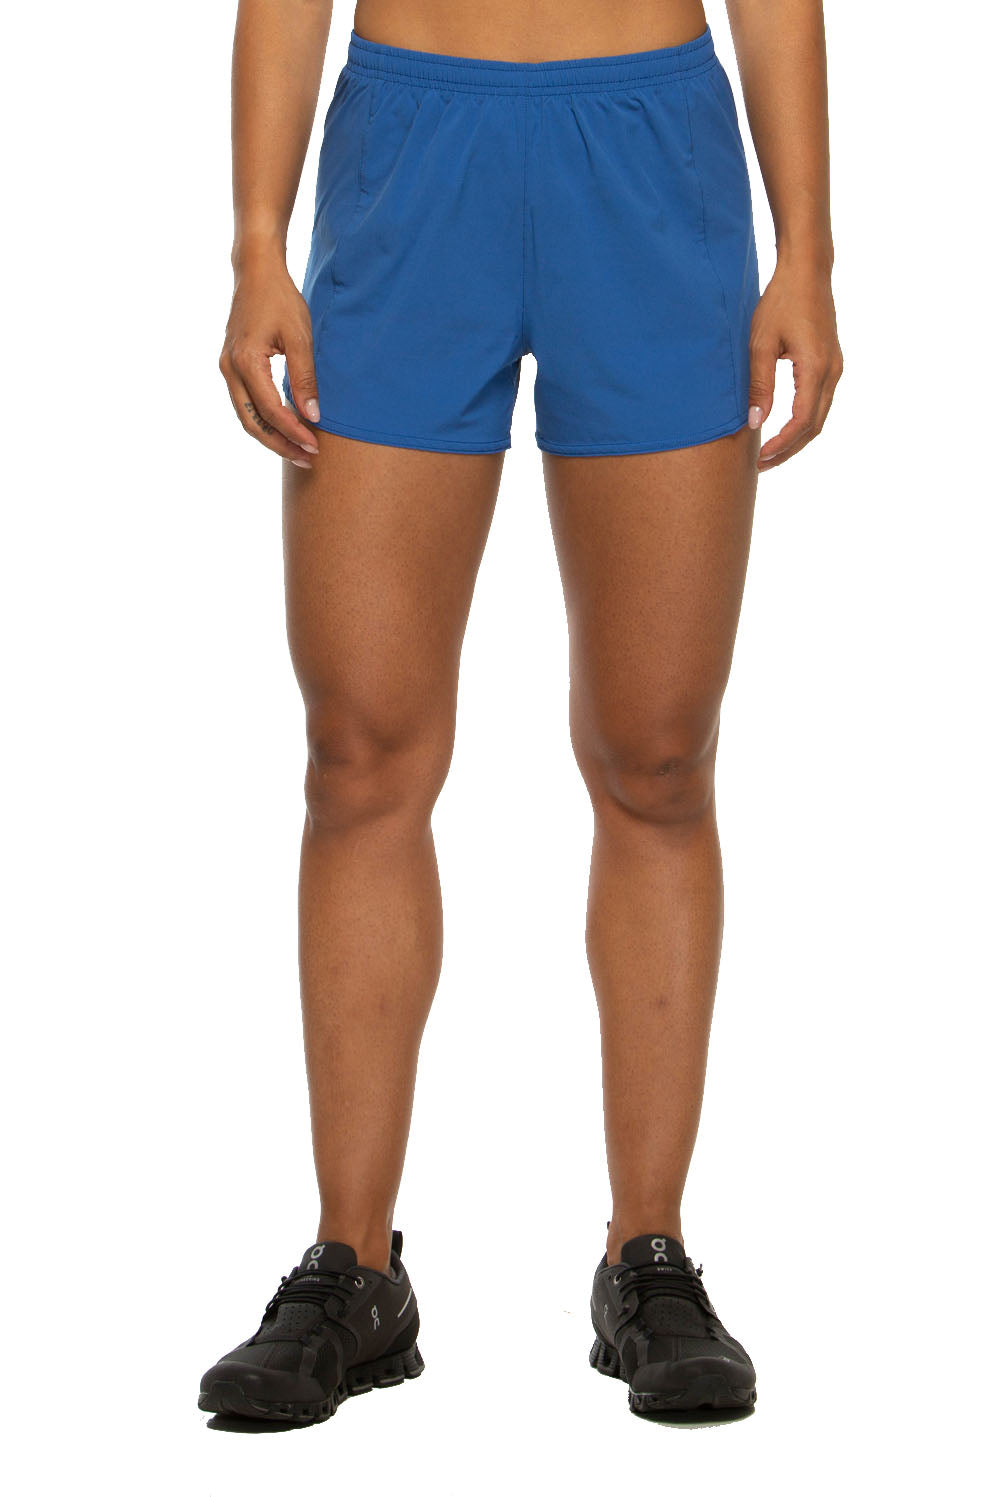 Zelos Women's Size Medium M Blue Stretchy Active Wear Running Shorts C19